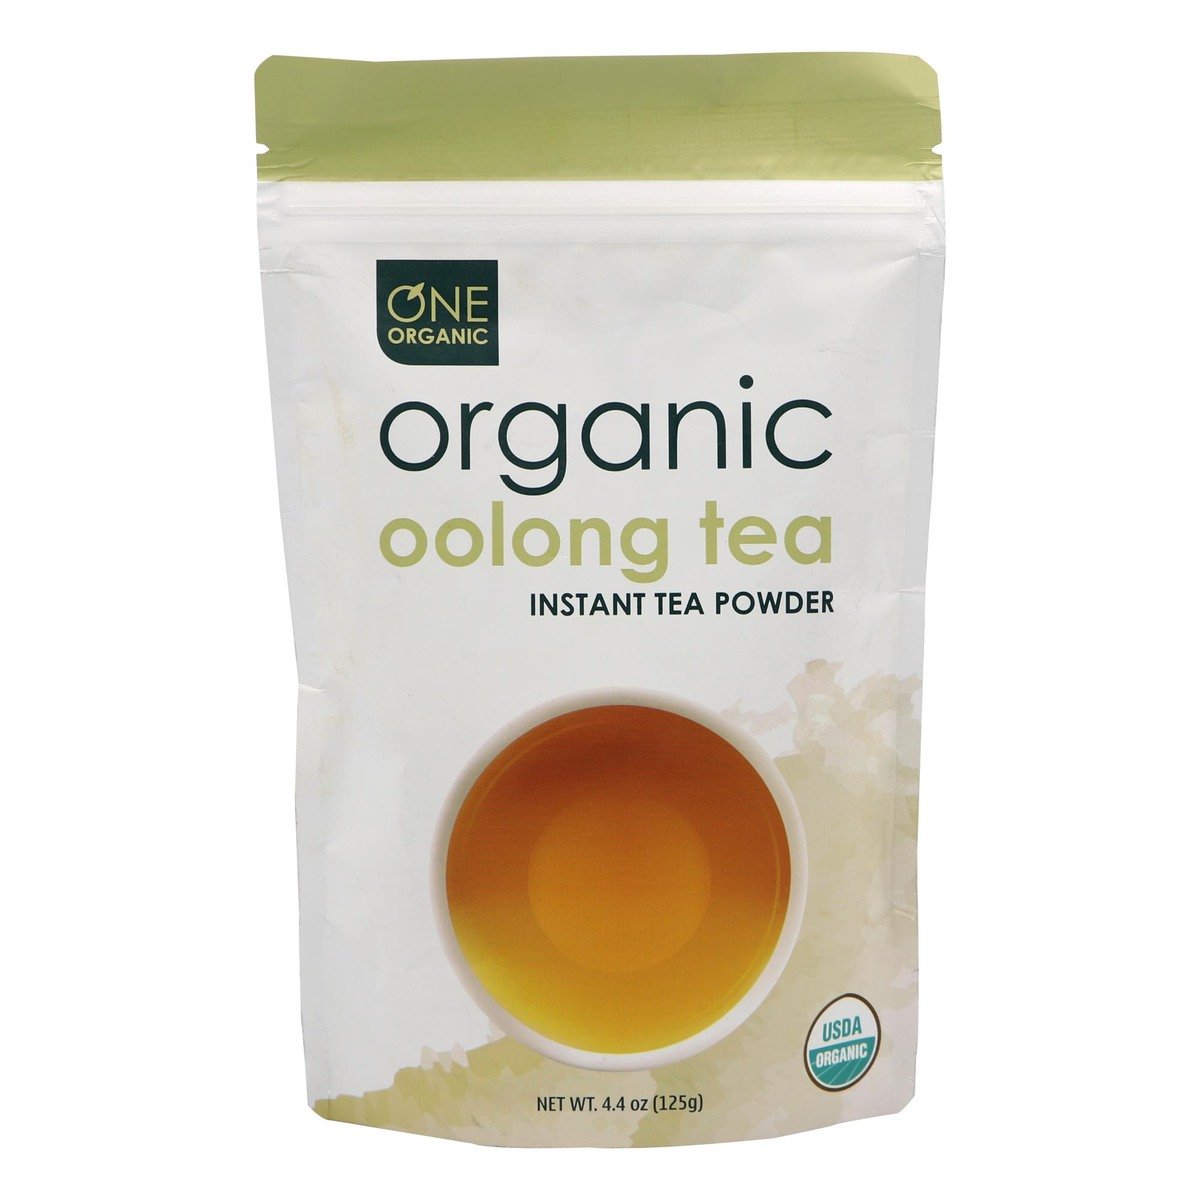 One Organic Instant Organic Oolong Tea Powder 125g